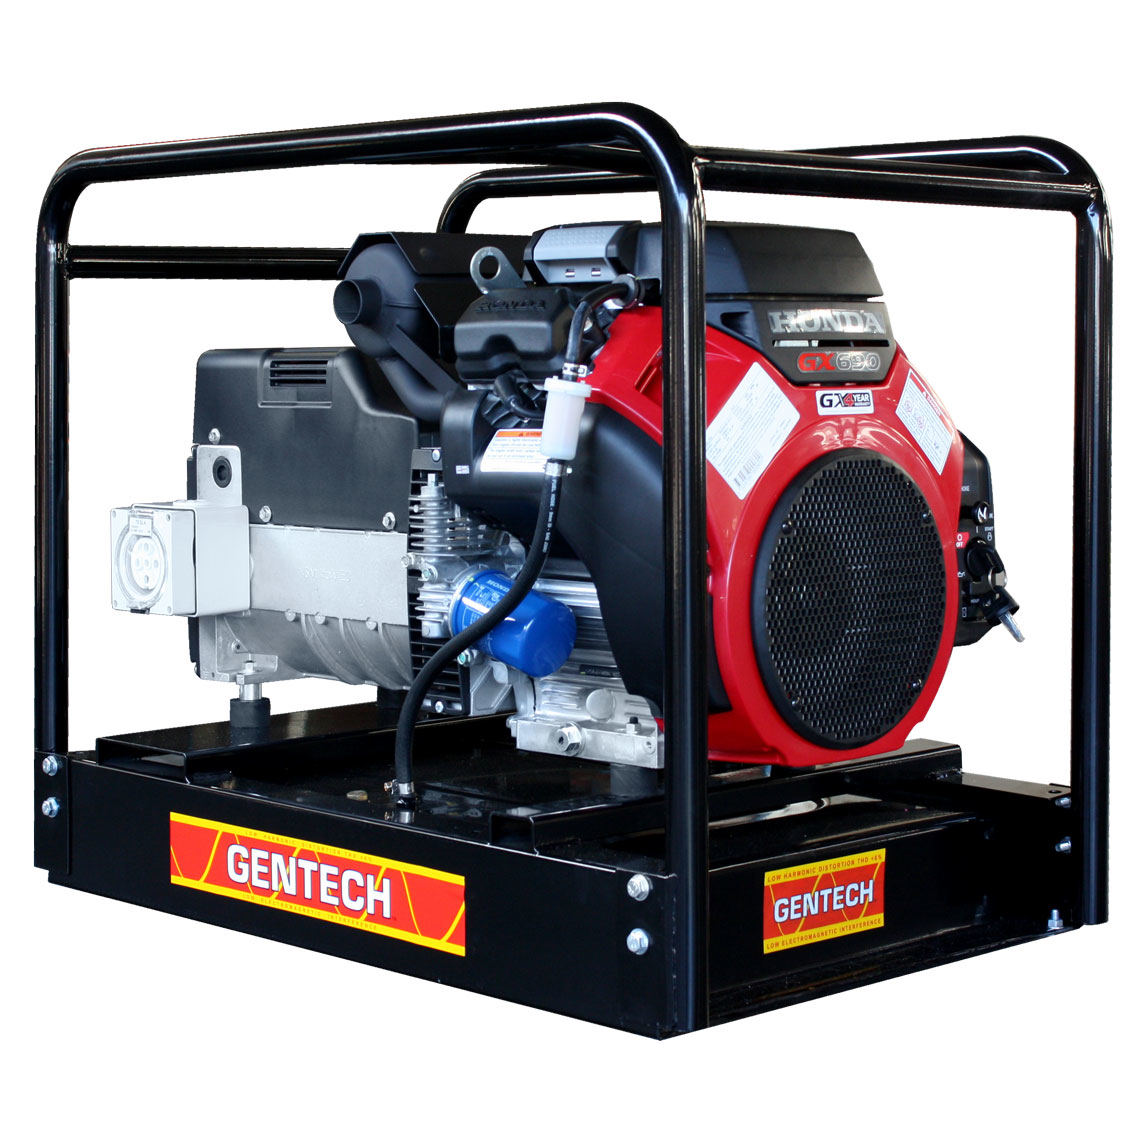 Gentech 415v 3Phase Generators